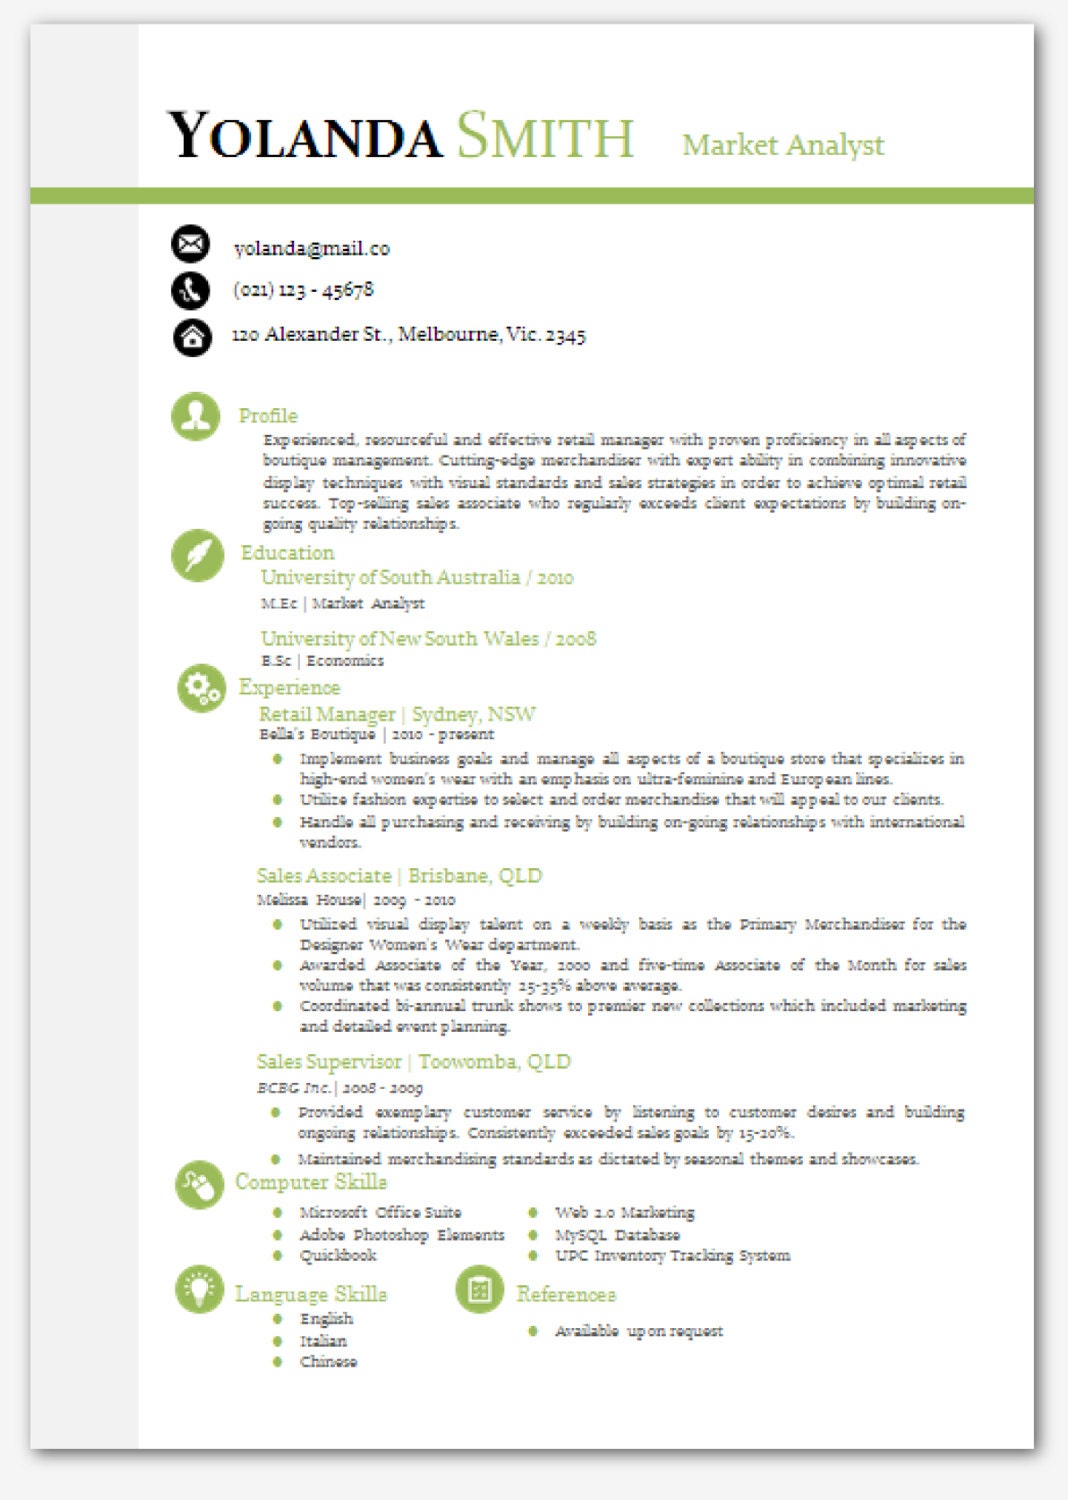 modern-microsoft-word-resume-template-resume-by-inkpower-on-etsy